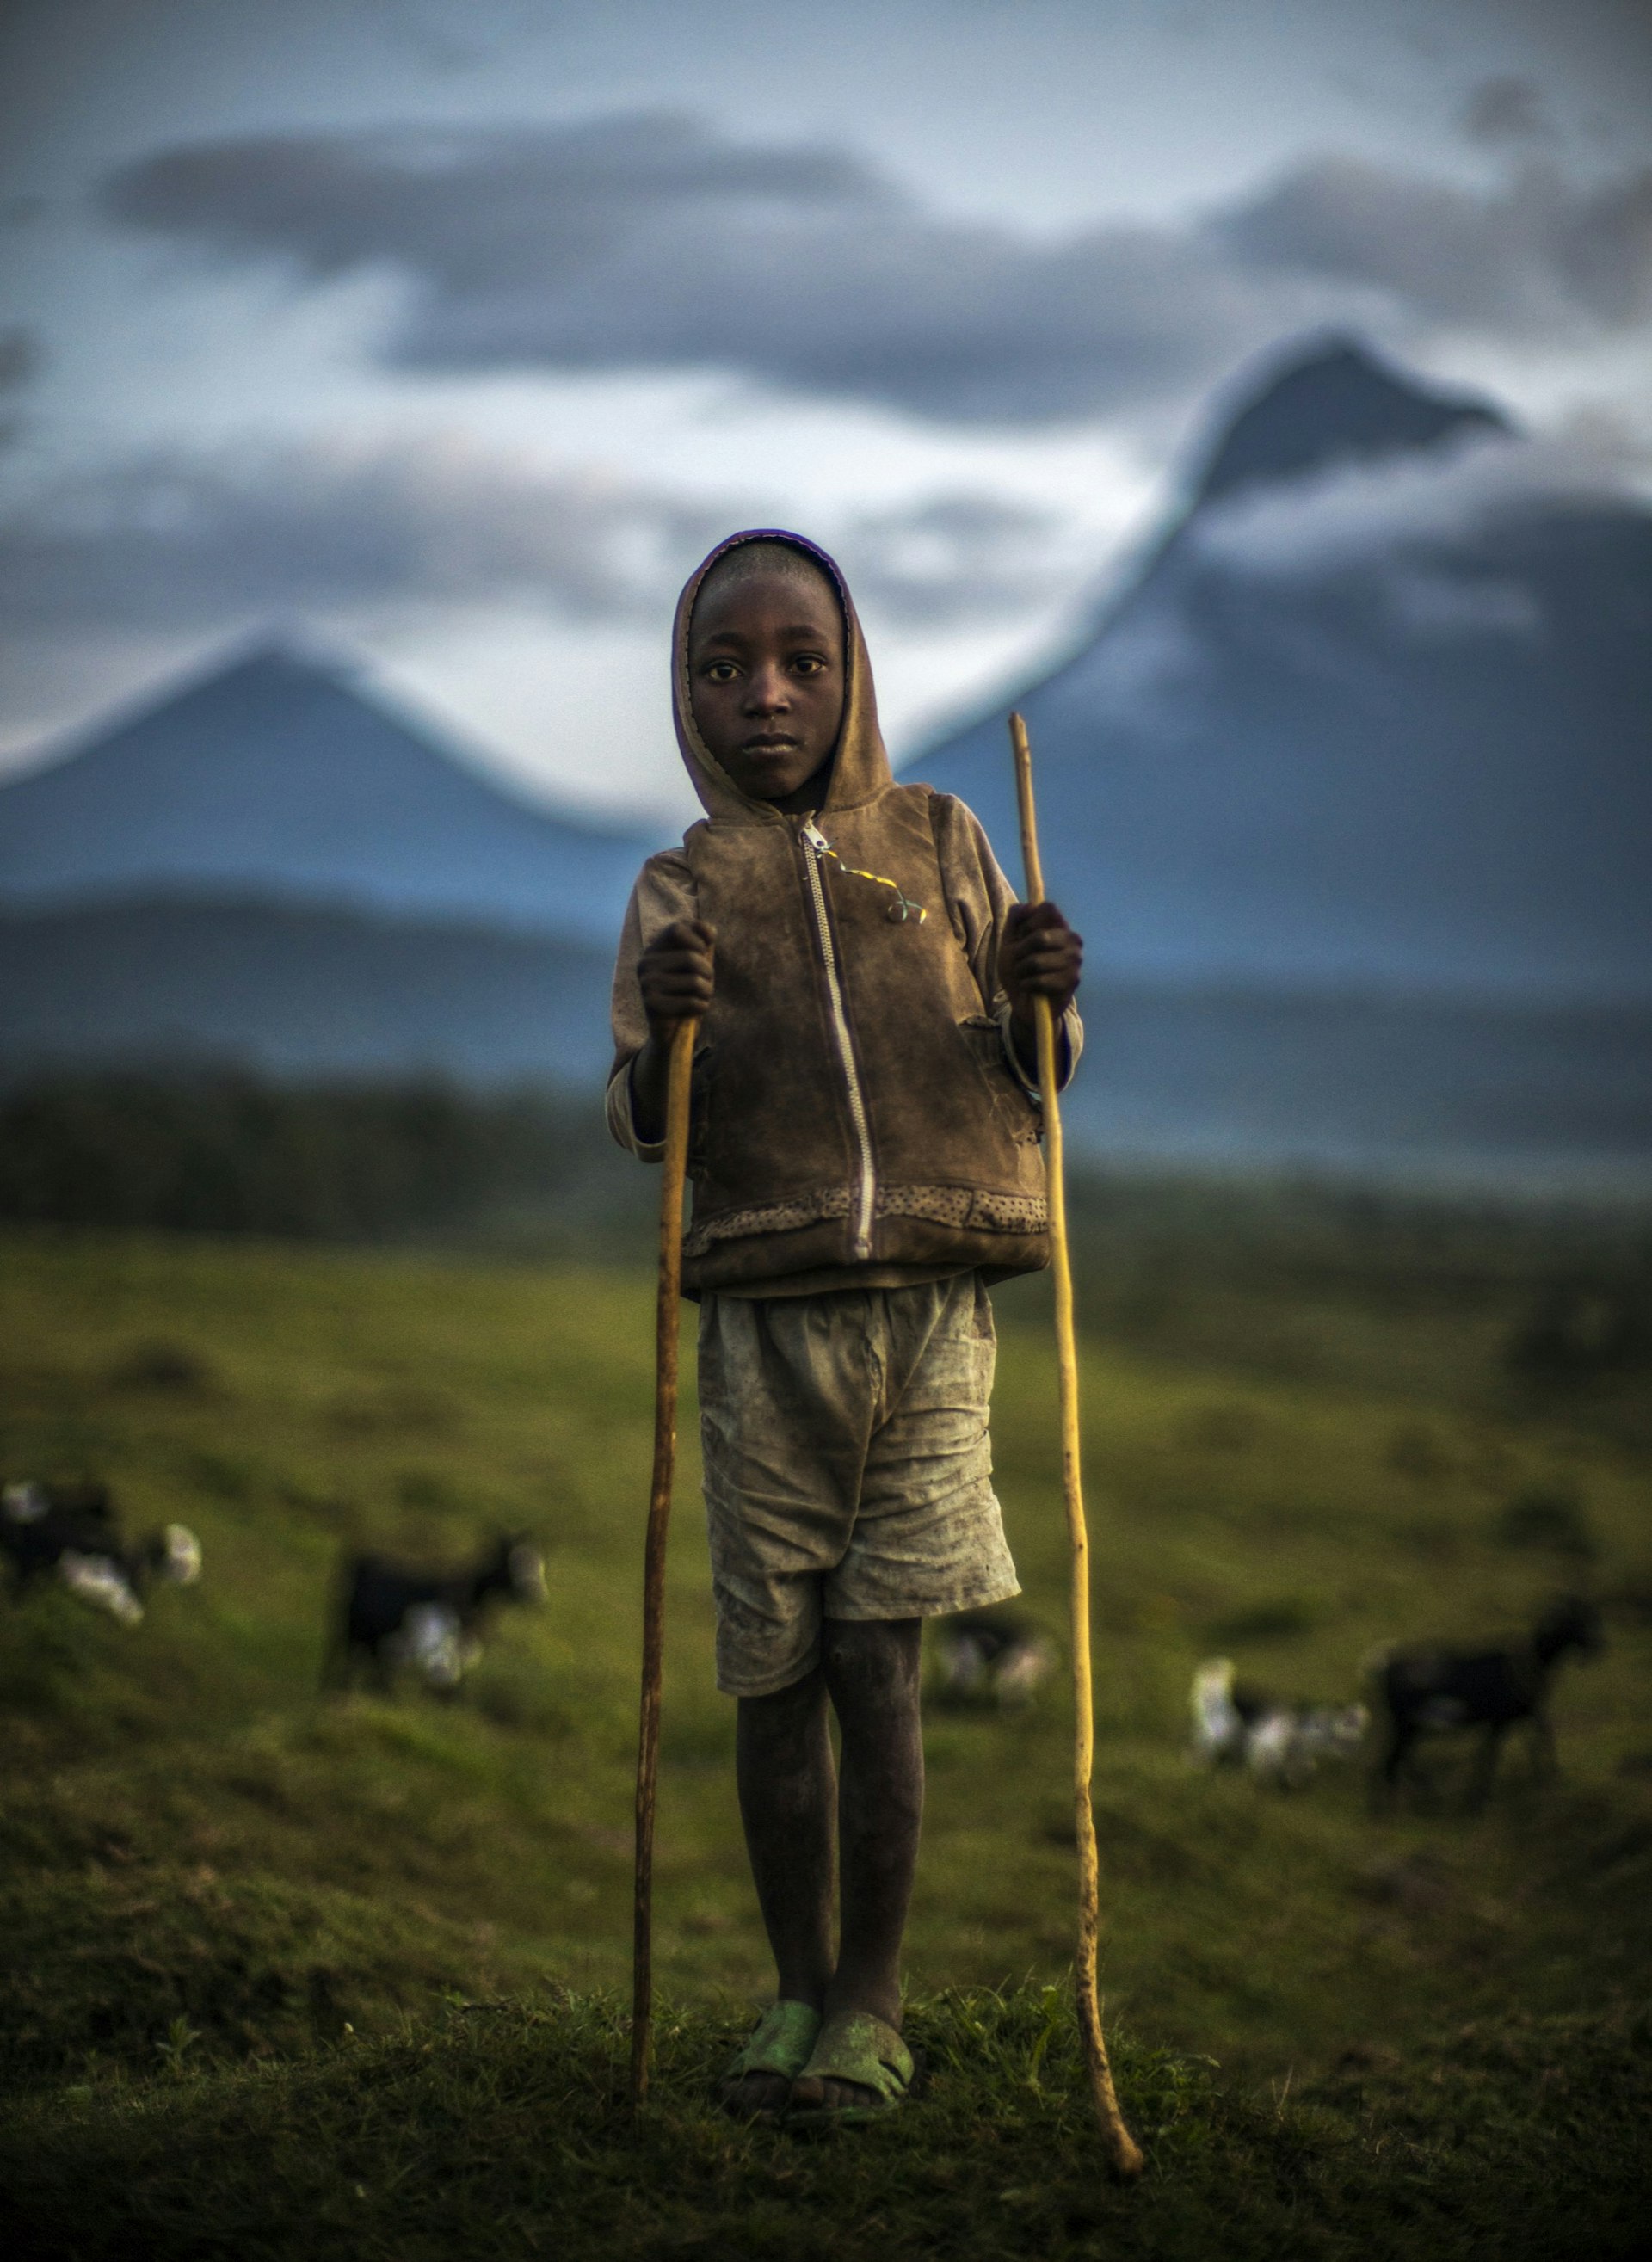 Sheepherder with Mount Mikeno. North Kivu, Democratic Republic of the Congo. 2016.